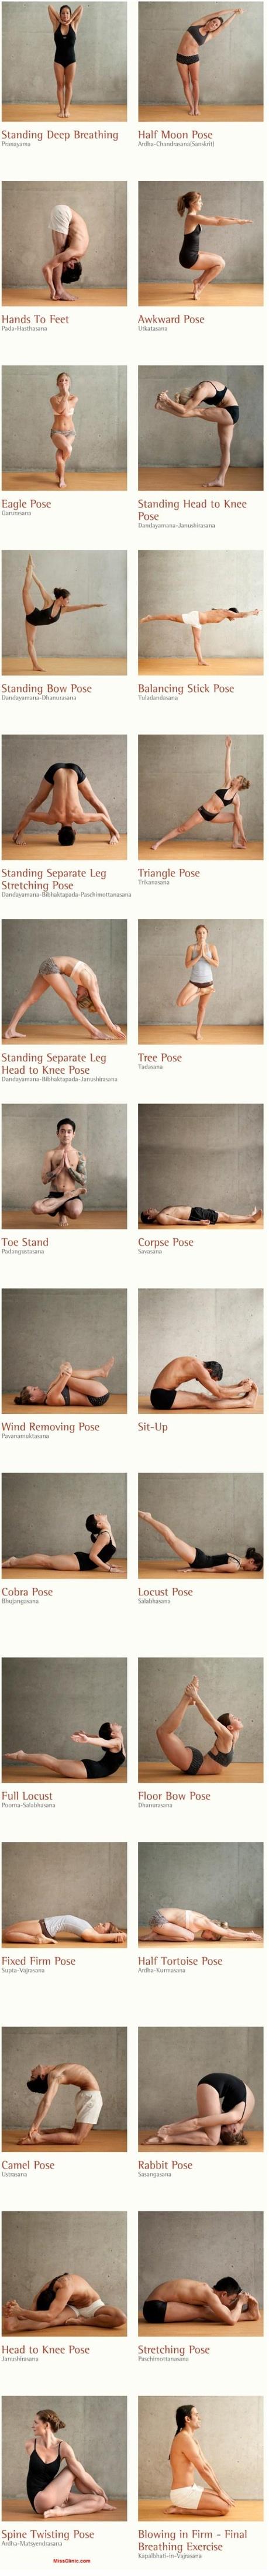 On a testé : Le Yoga Bikram